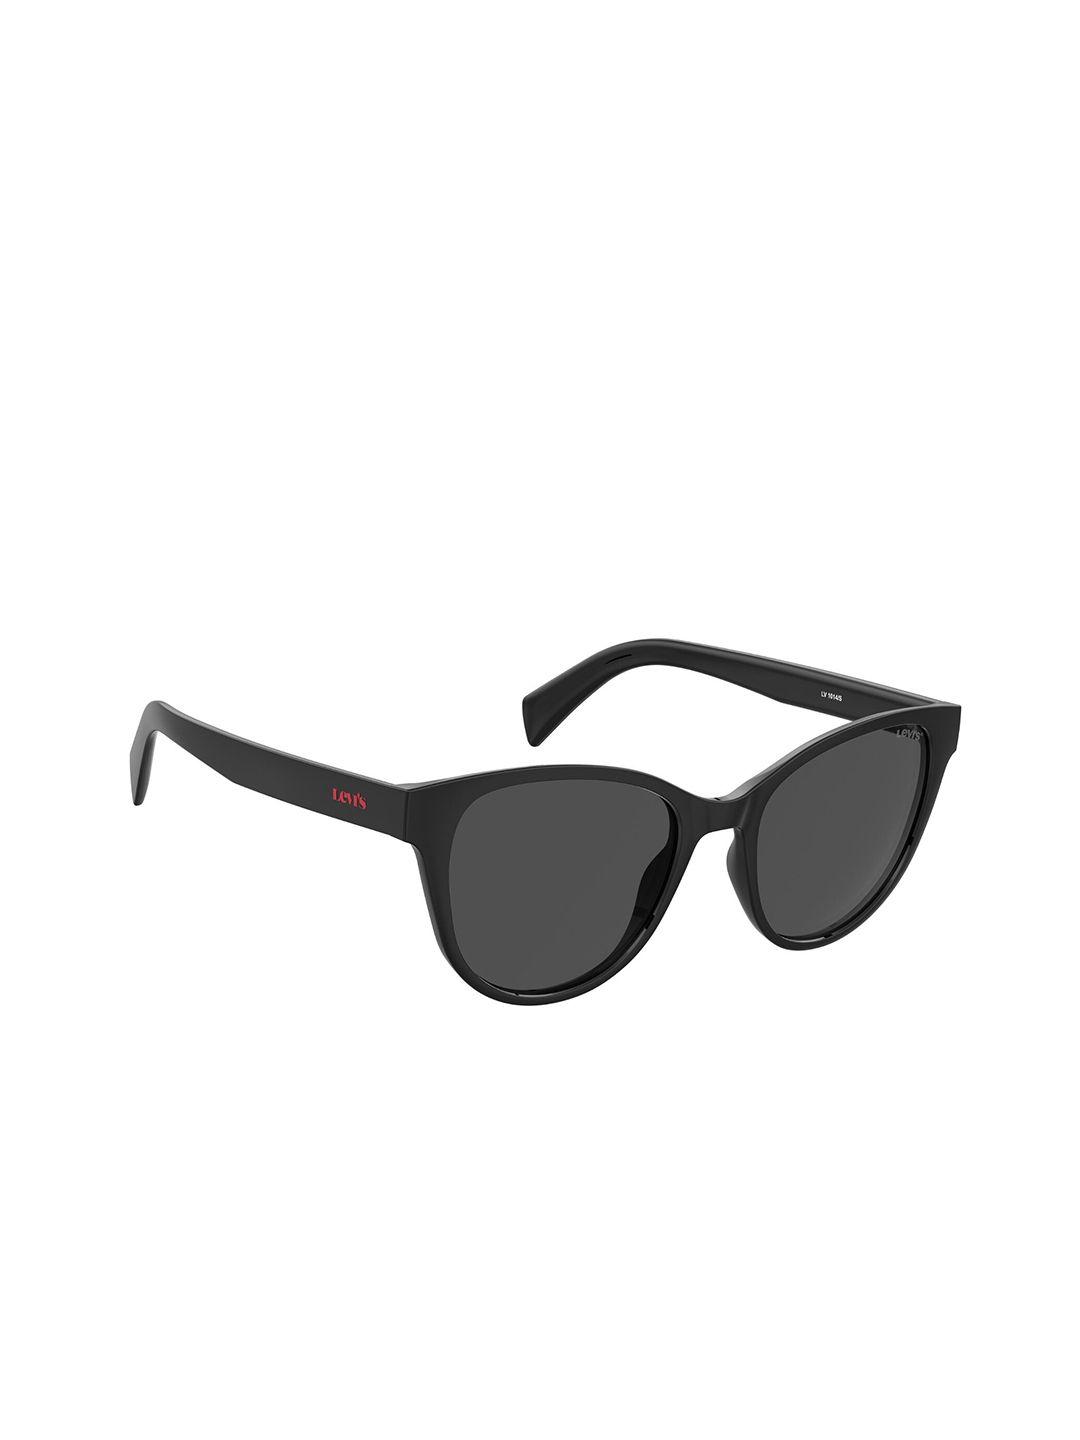 levis-women-cateye-sunglasses-with-polarised-lens-20399580754ir